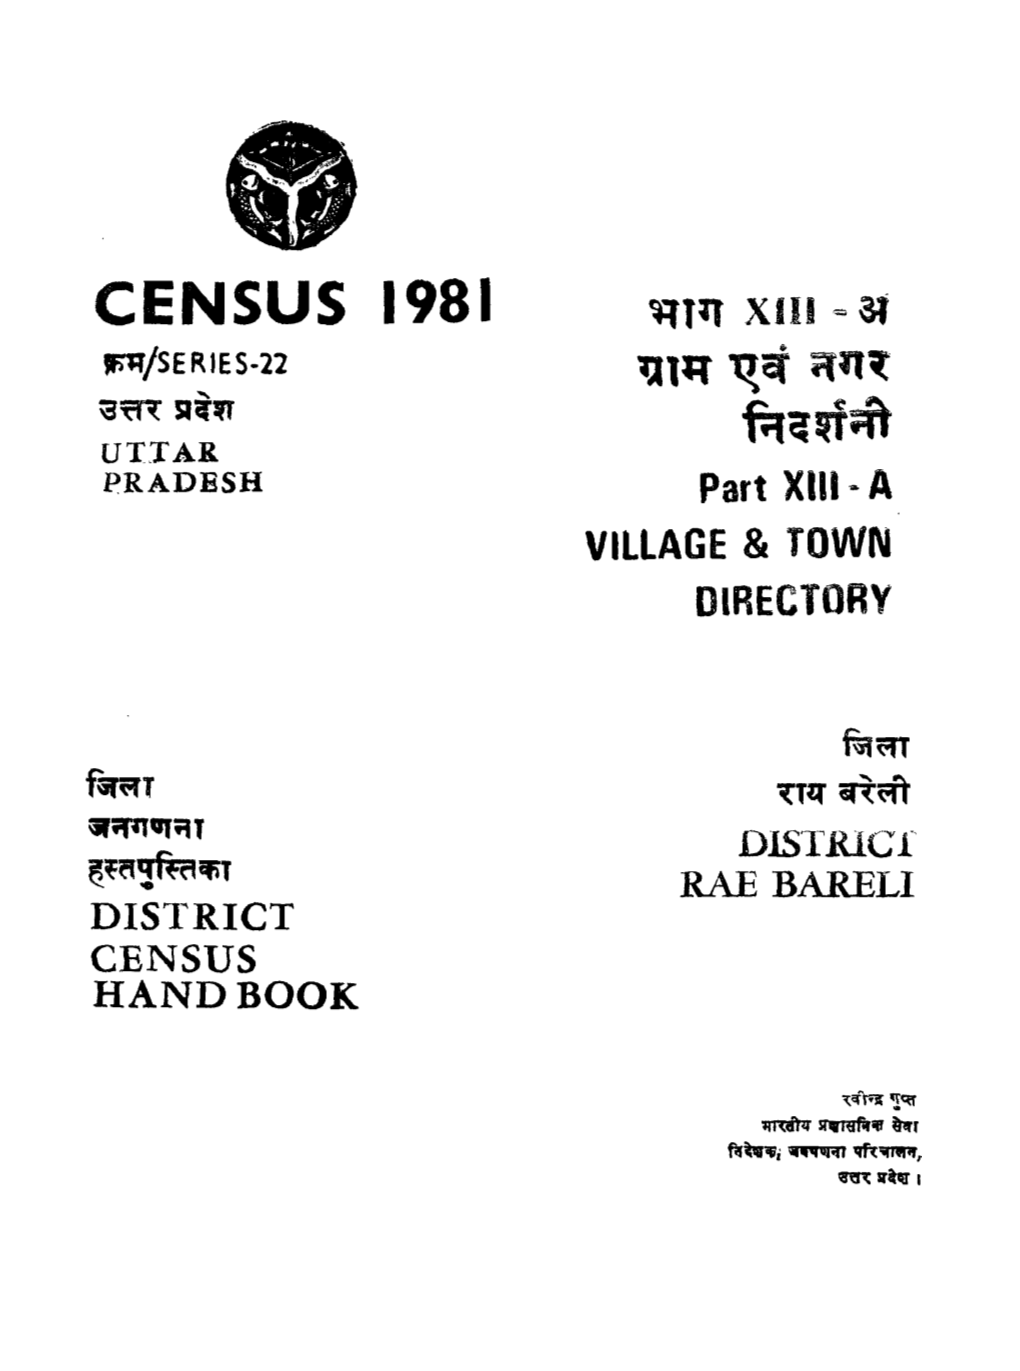 District Census Handbook, Rae Bareli, Part XIII-A, Series-22, Uttar